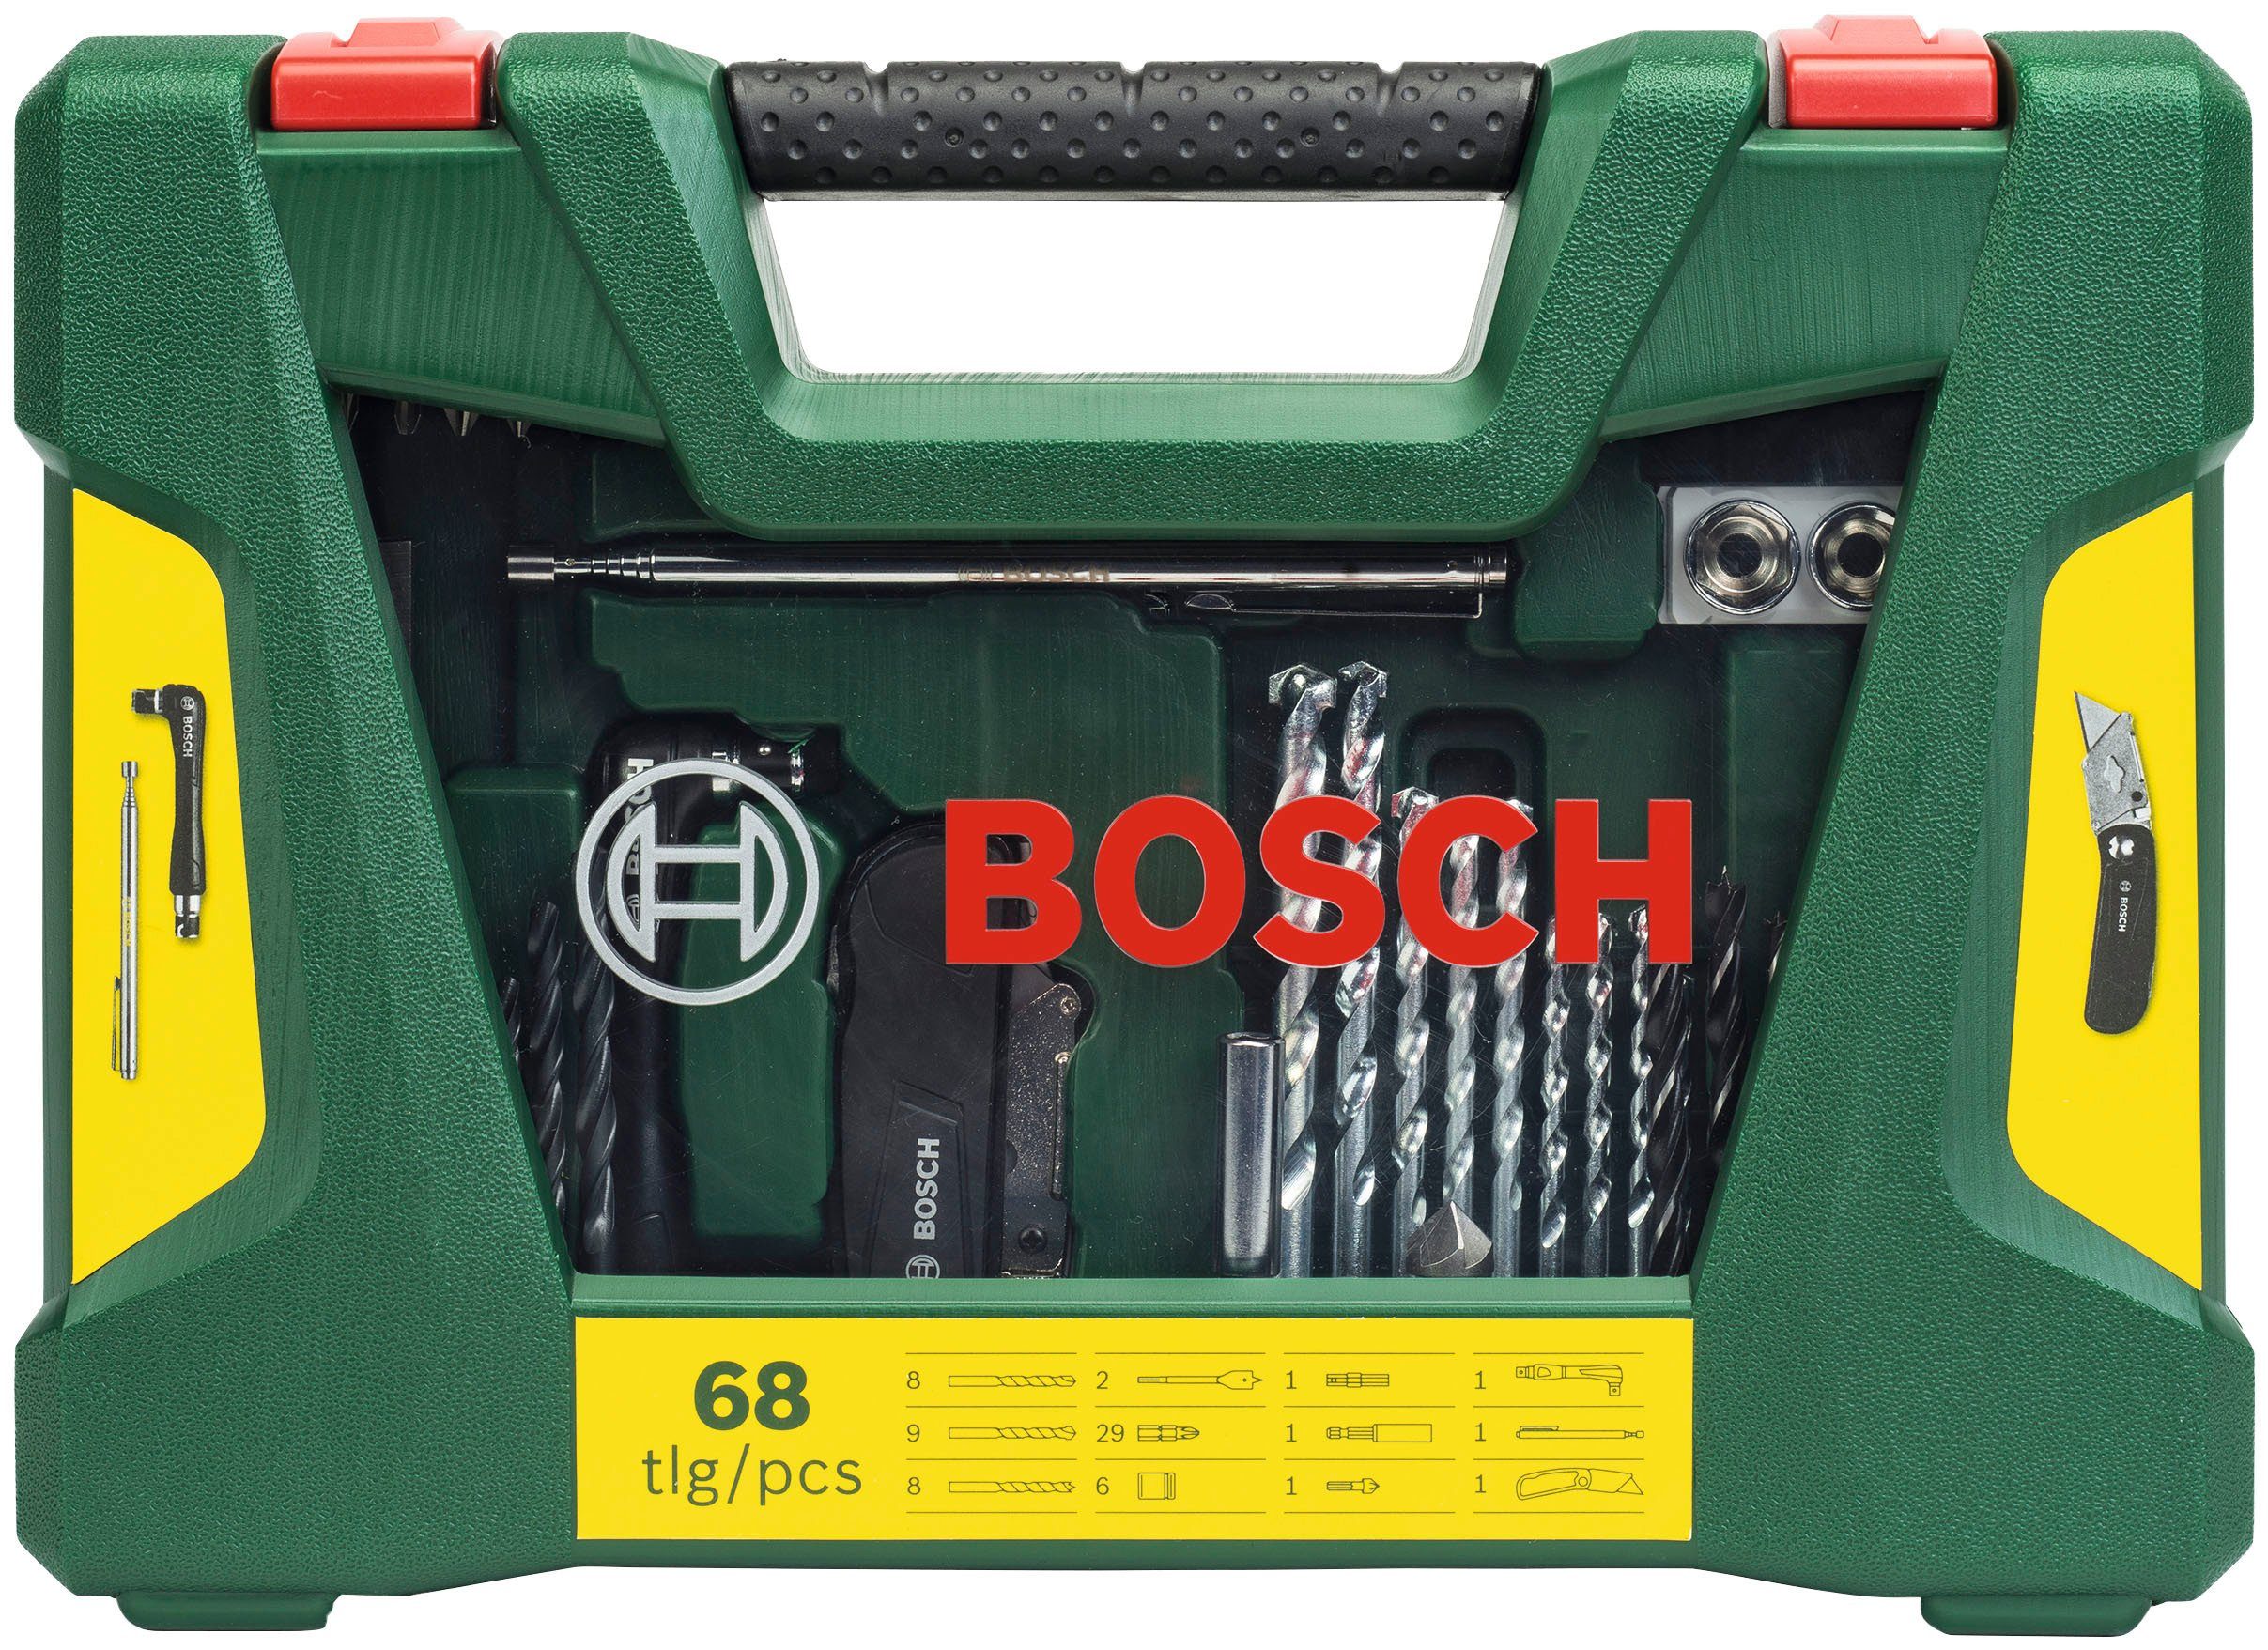 Bosch & und V-Line Garden Box, Bohrer- Home Set, 68-teilige Bitset